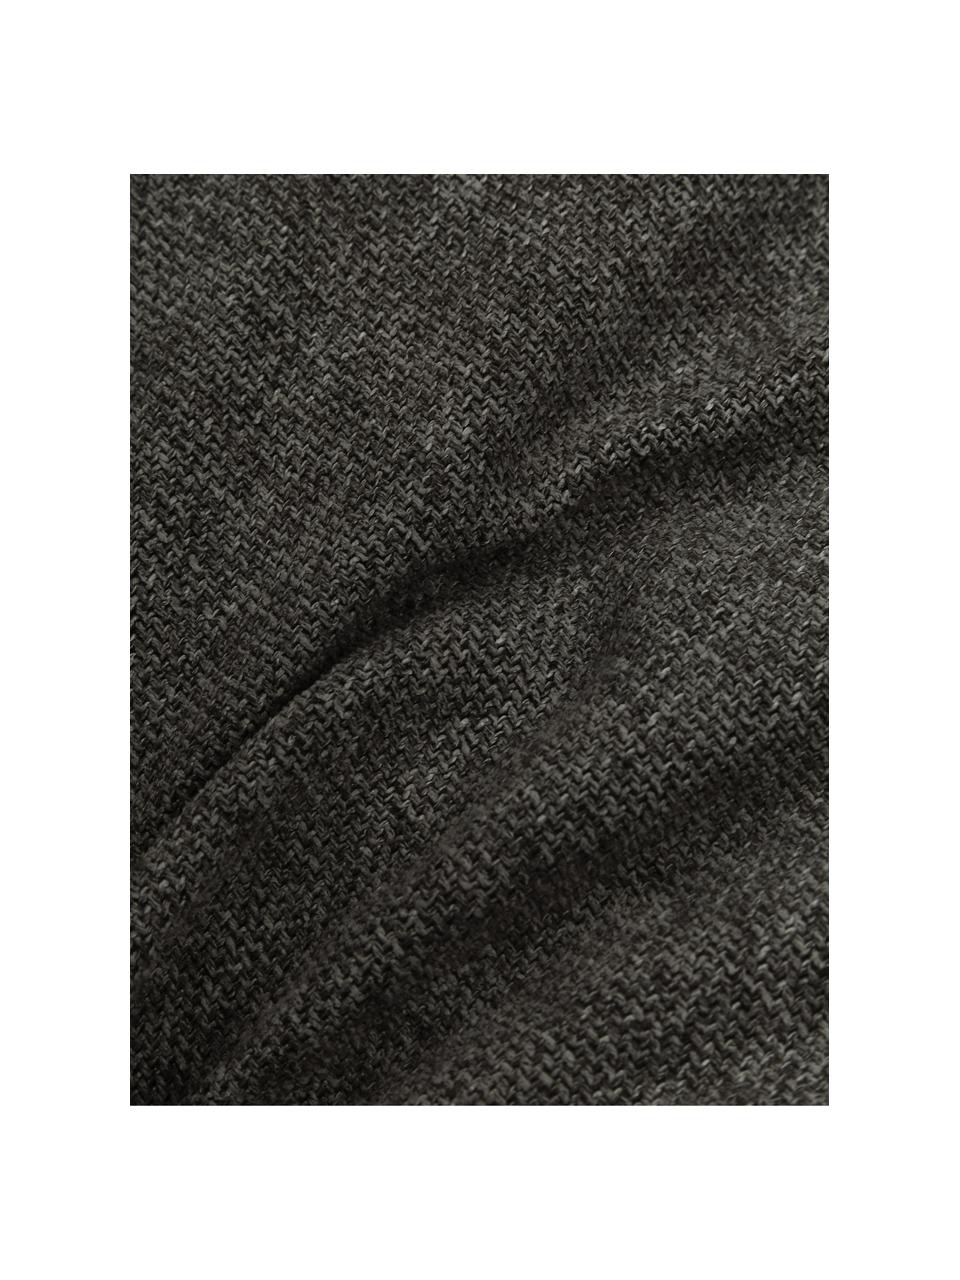 Bankkussen Lennon, Geweven stof antraciet, B 60 x L 60 cm